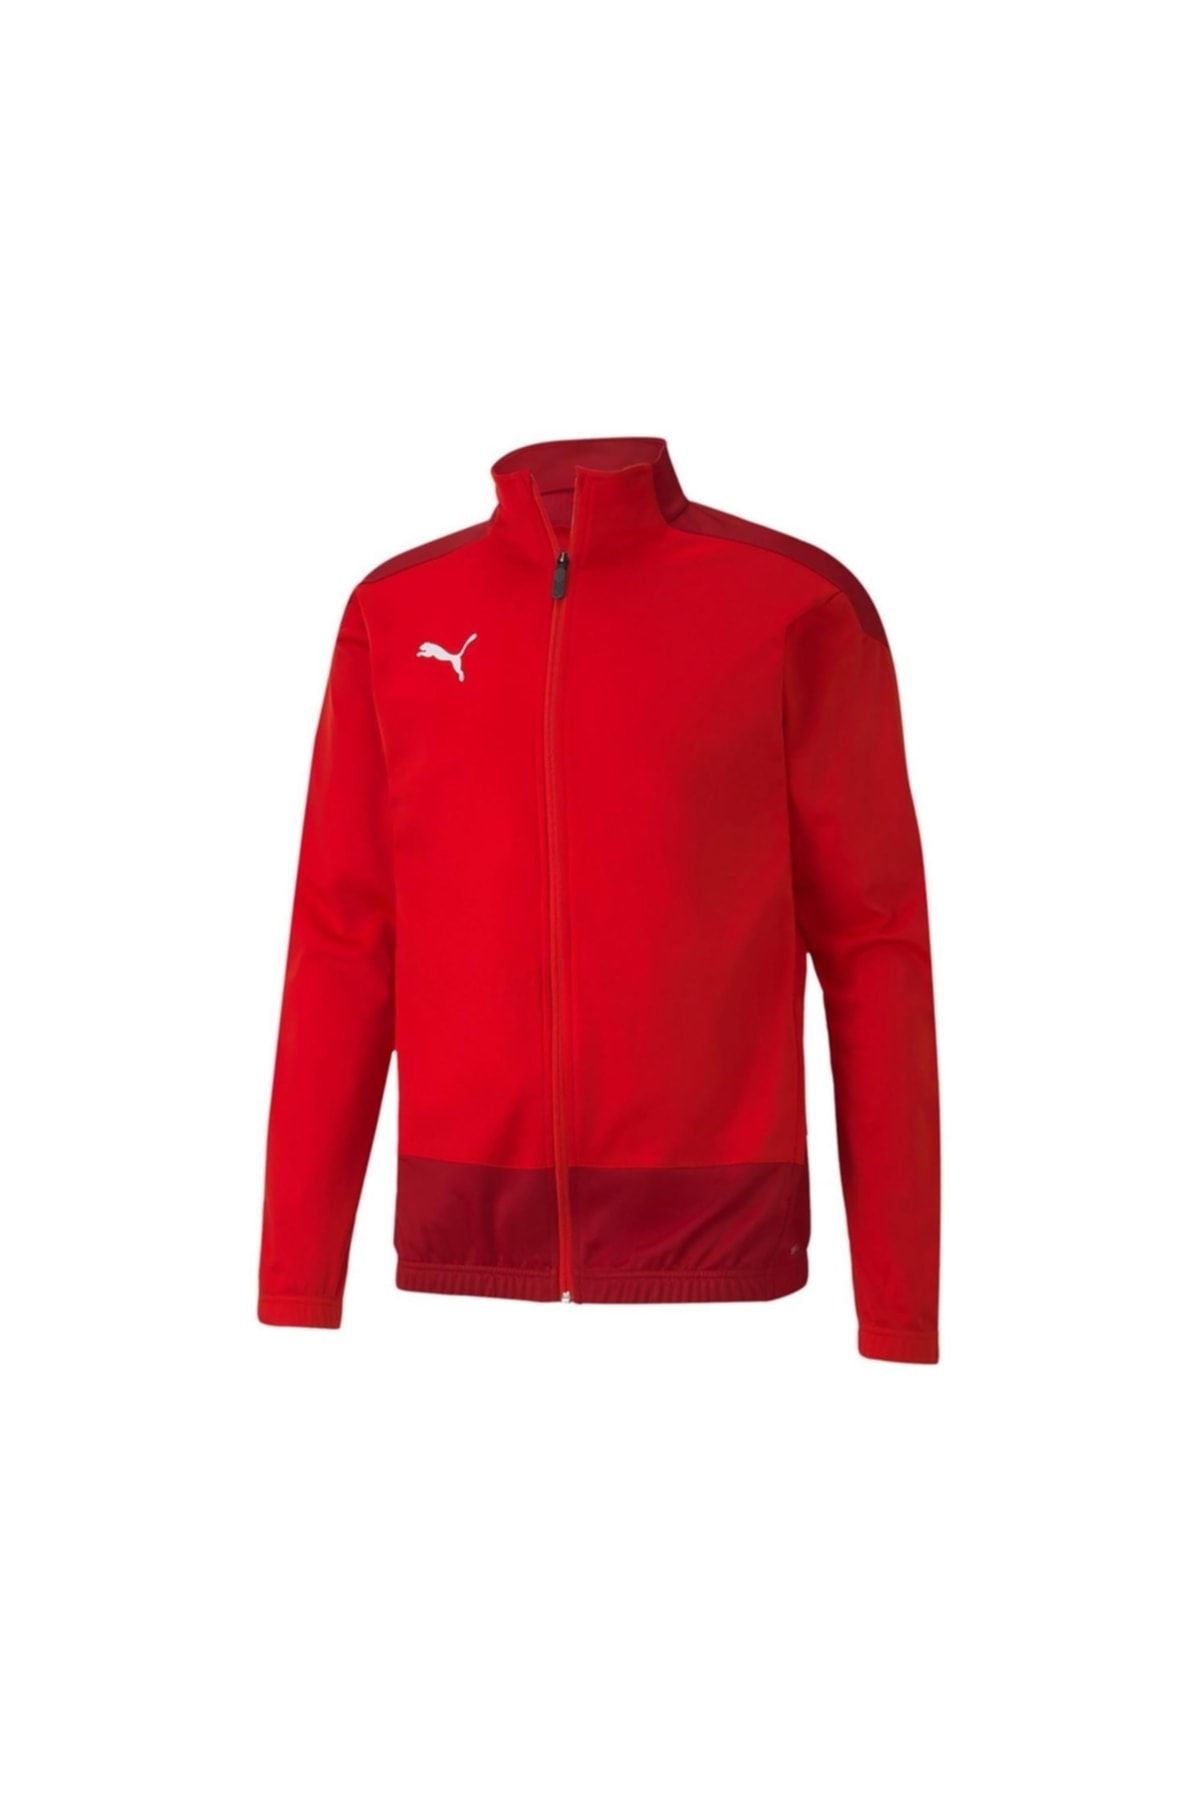 Puma Teamgoal 23 Training Jacket Erkek Futbol Antrenman Ceketi 65656101 Kırmızı